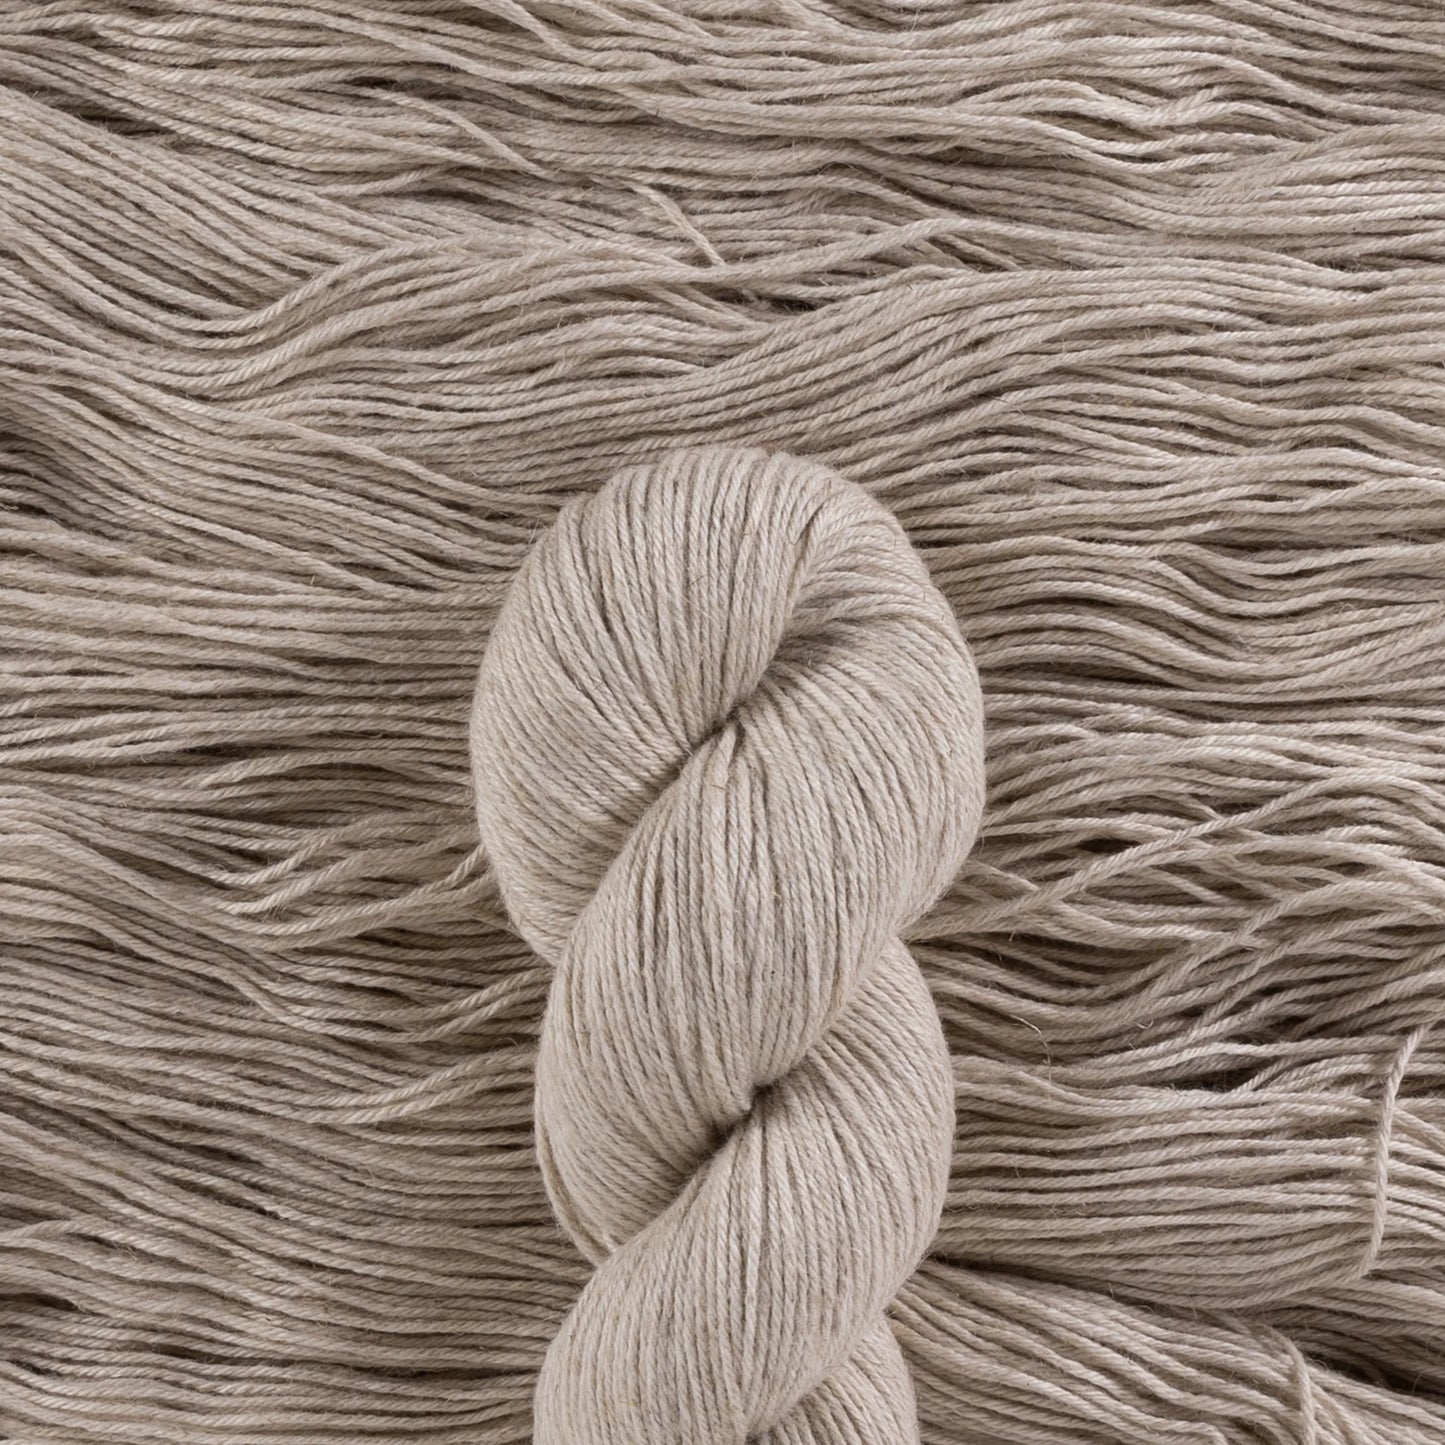 UNDINE DK - Cotton/Linen Blend - Ritual Dyes